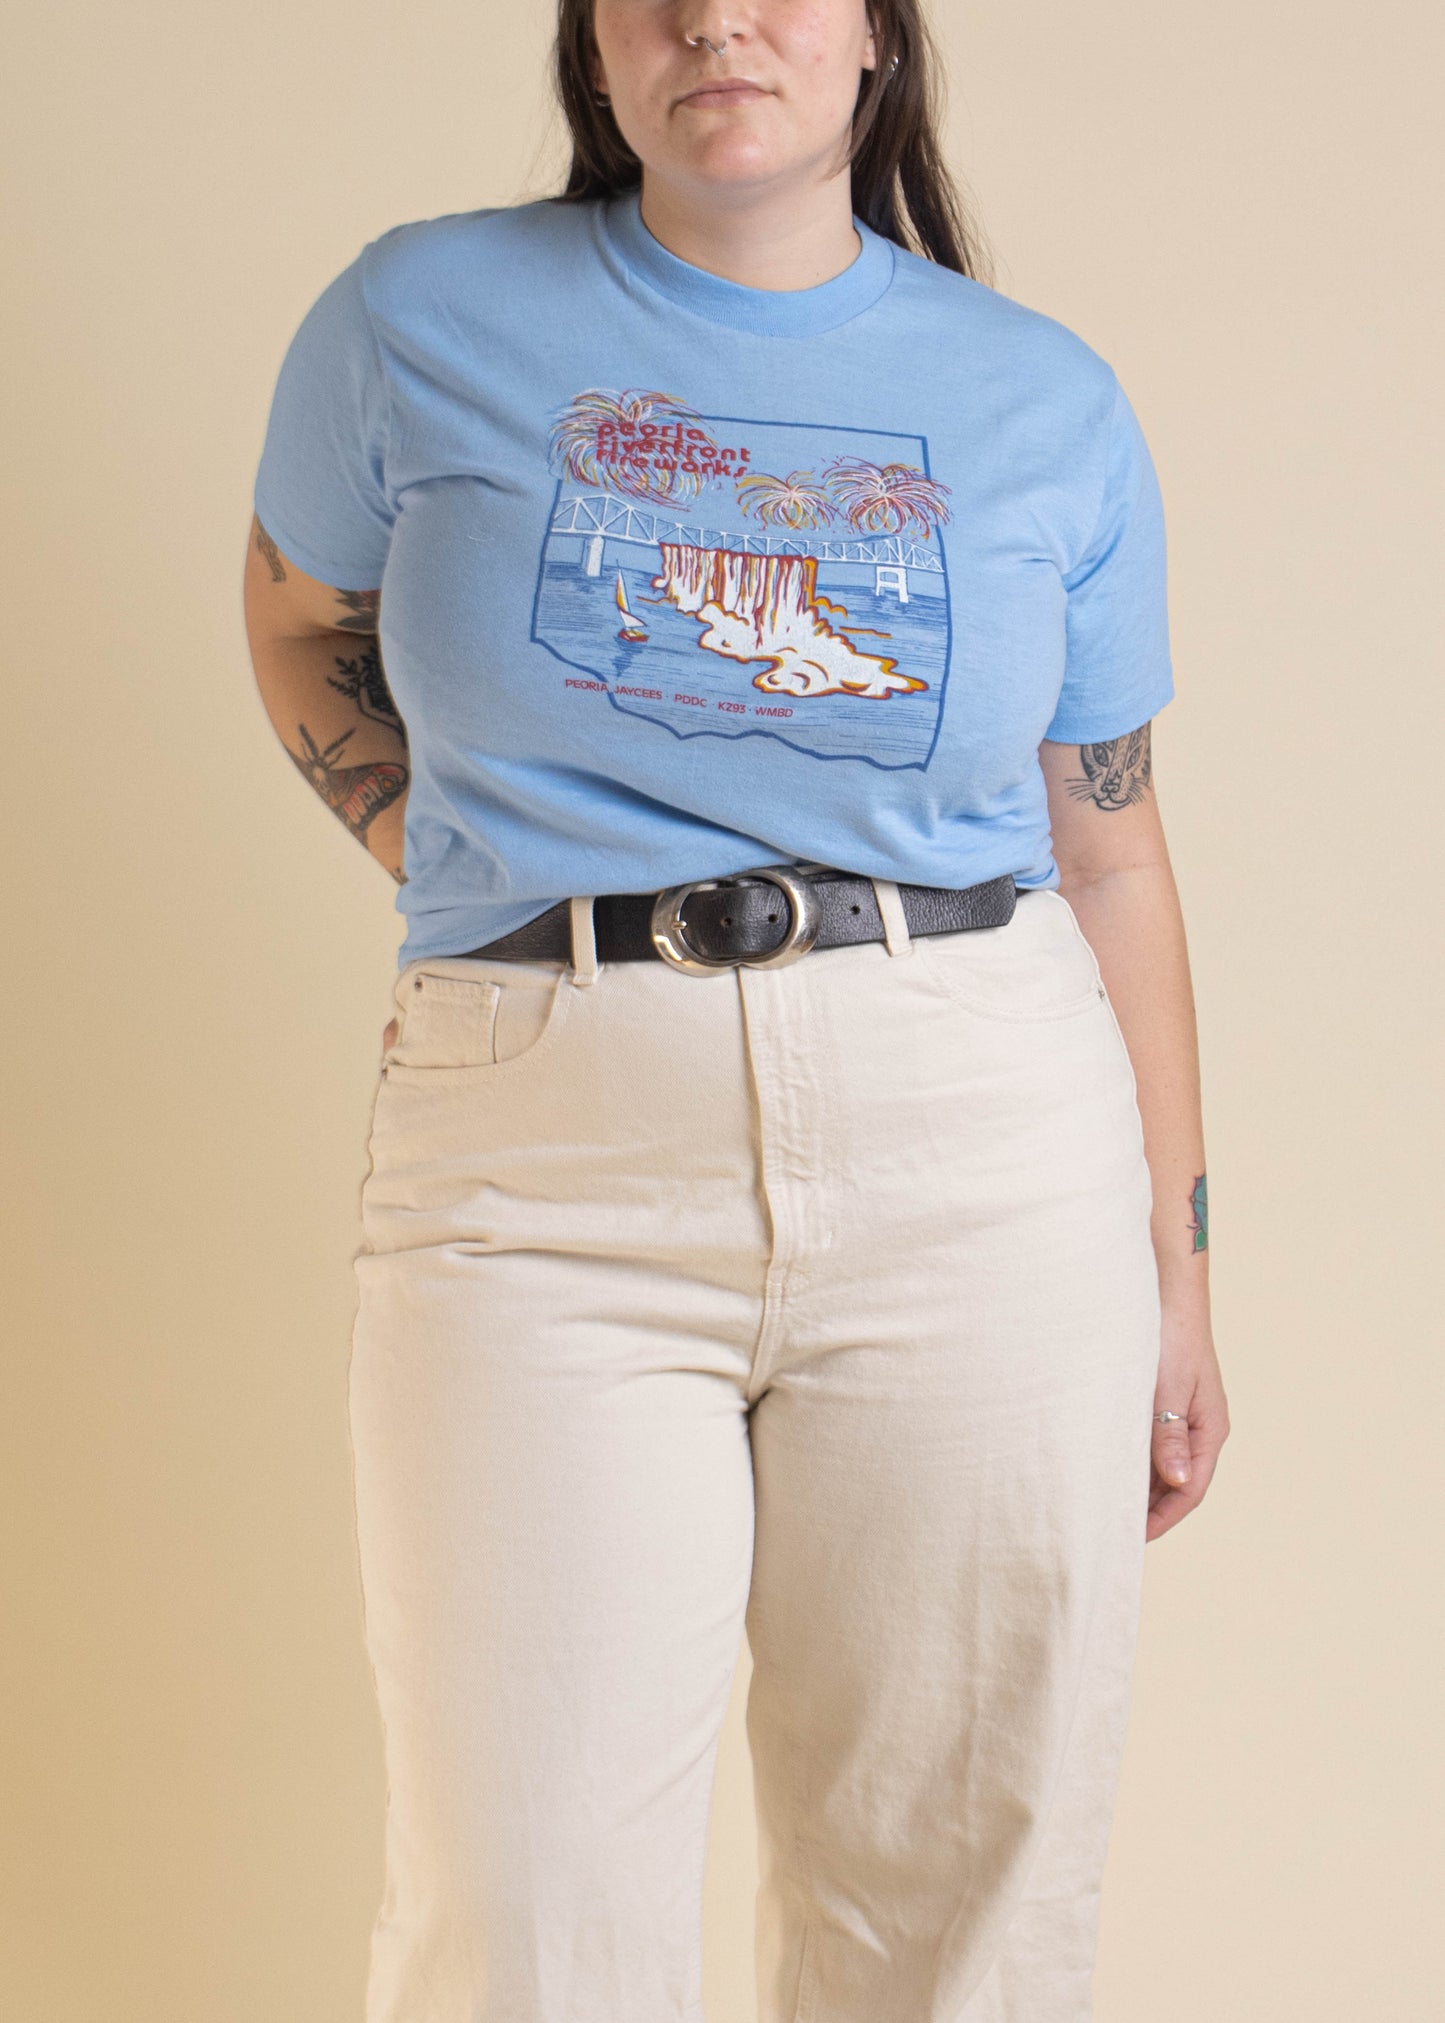 1980s Super Screen Stars Peoria Riverfront Firework Souvenir T-Shirt Size M/L